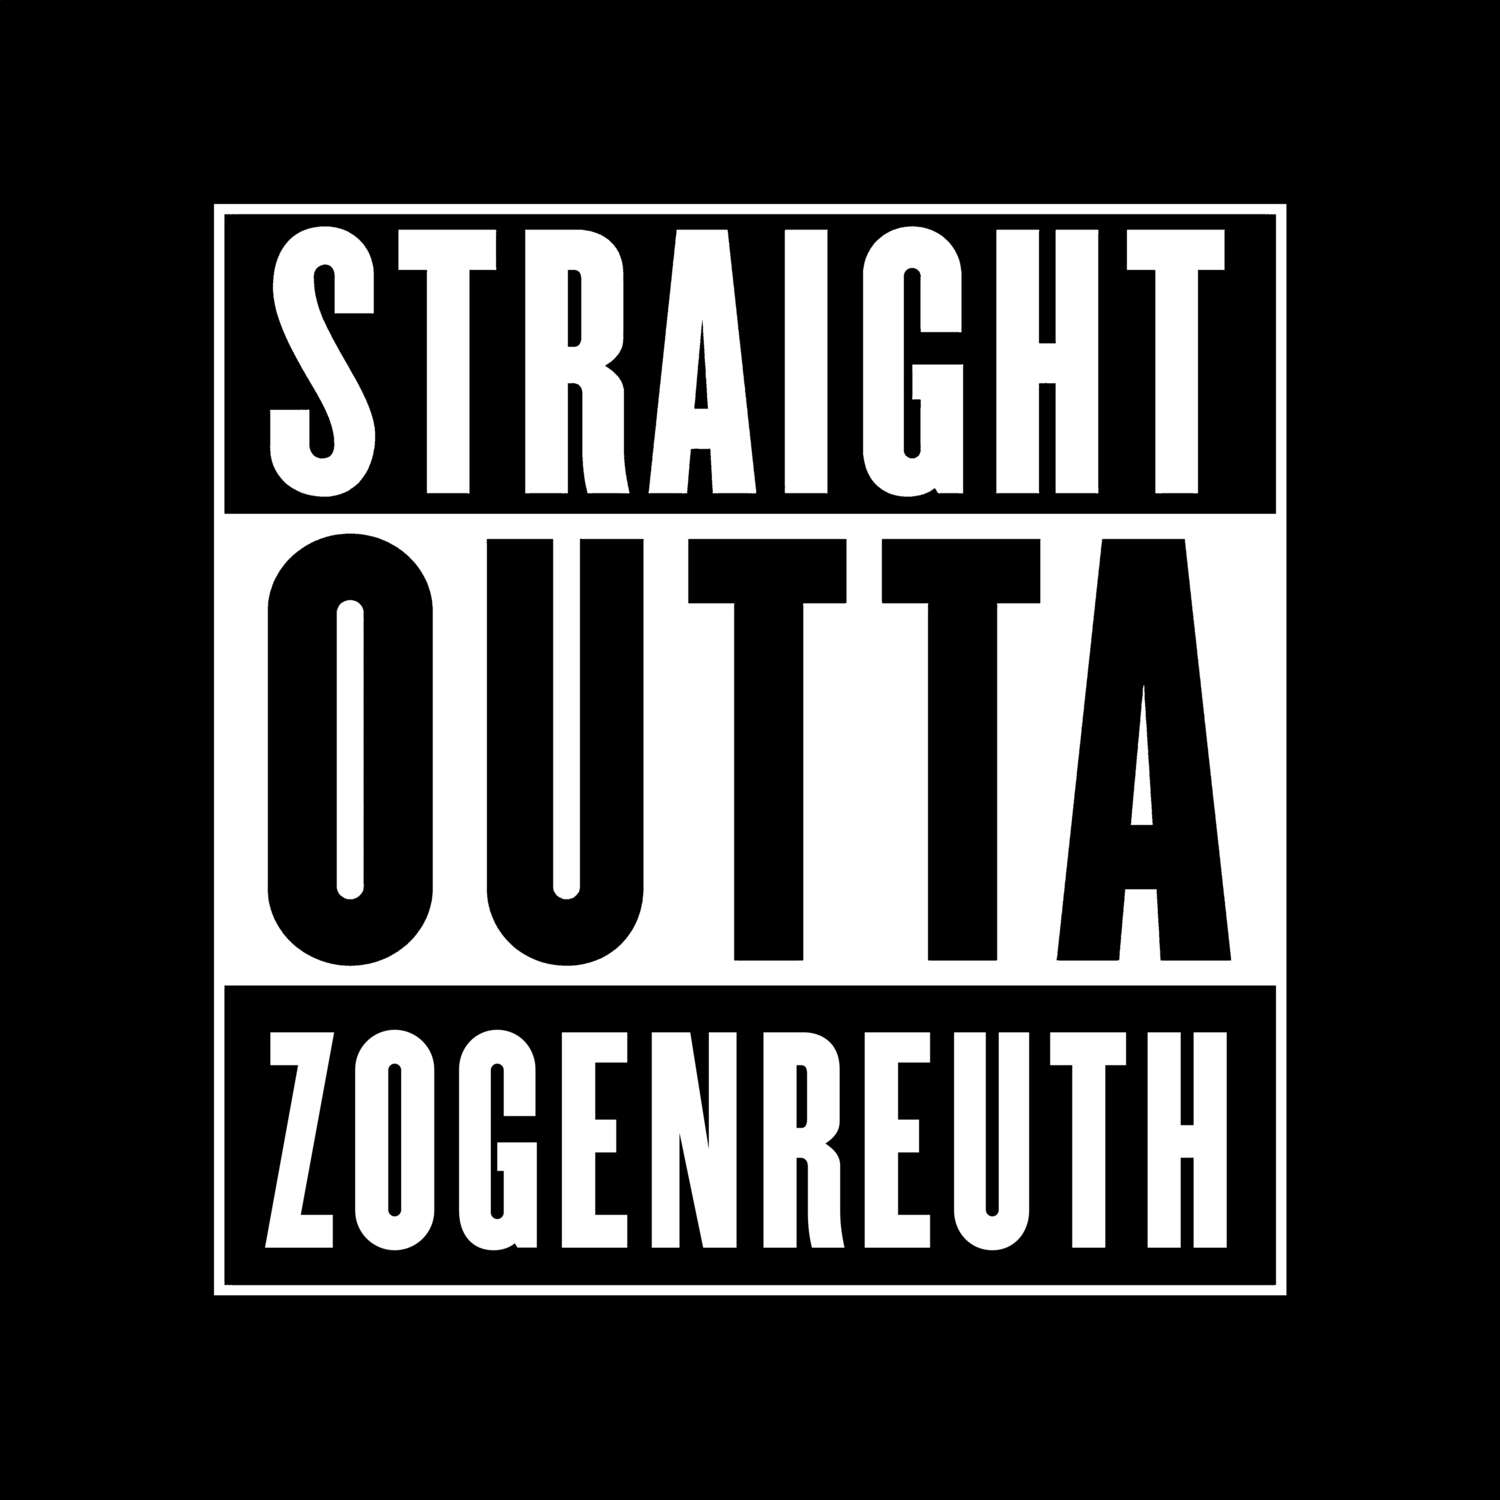 Zogenreuth T-Shirt »Straight Outta«